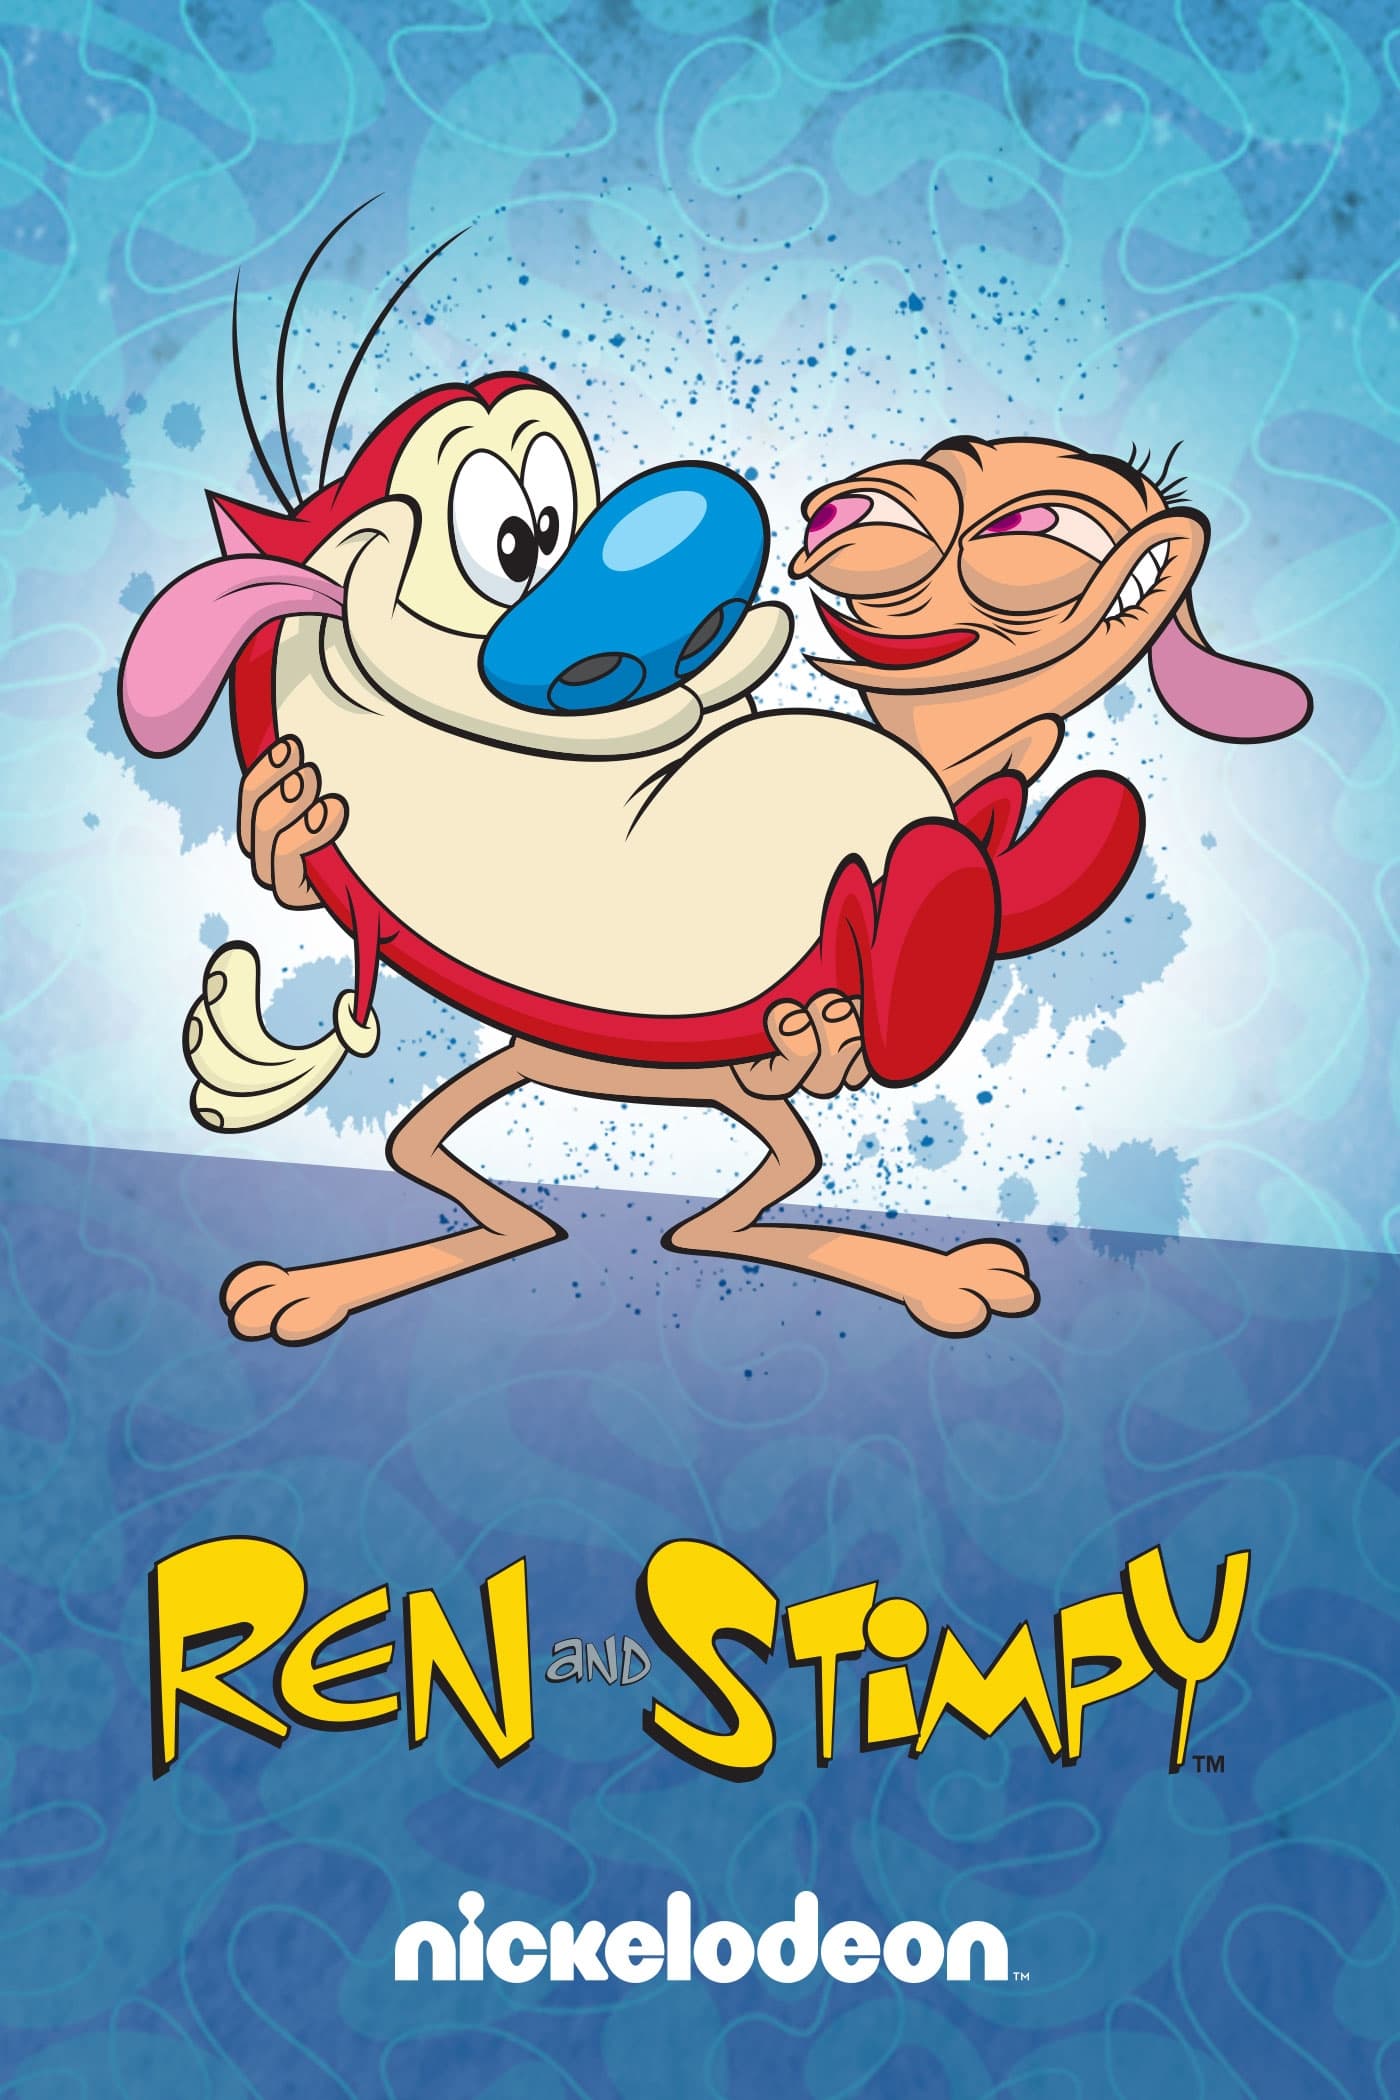 The Ren & Stimpy Show (1991)